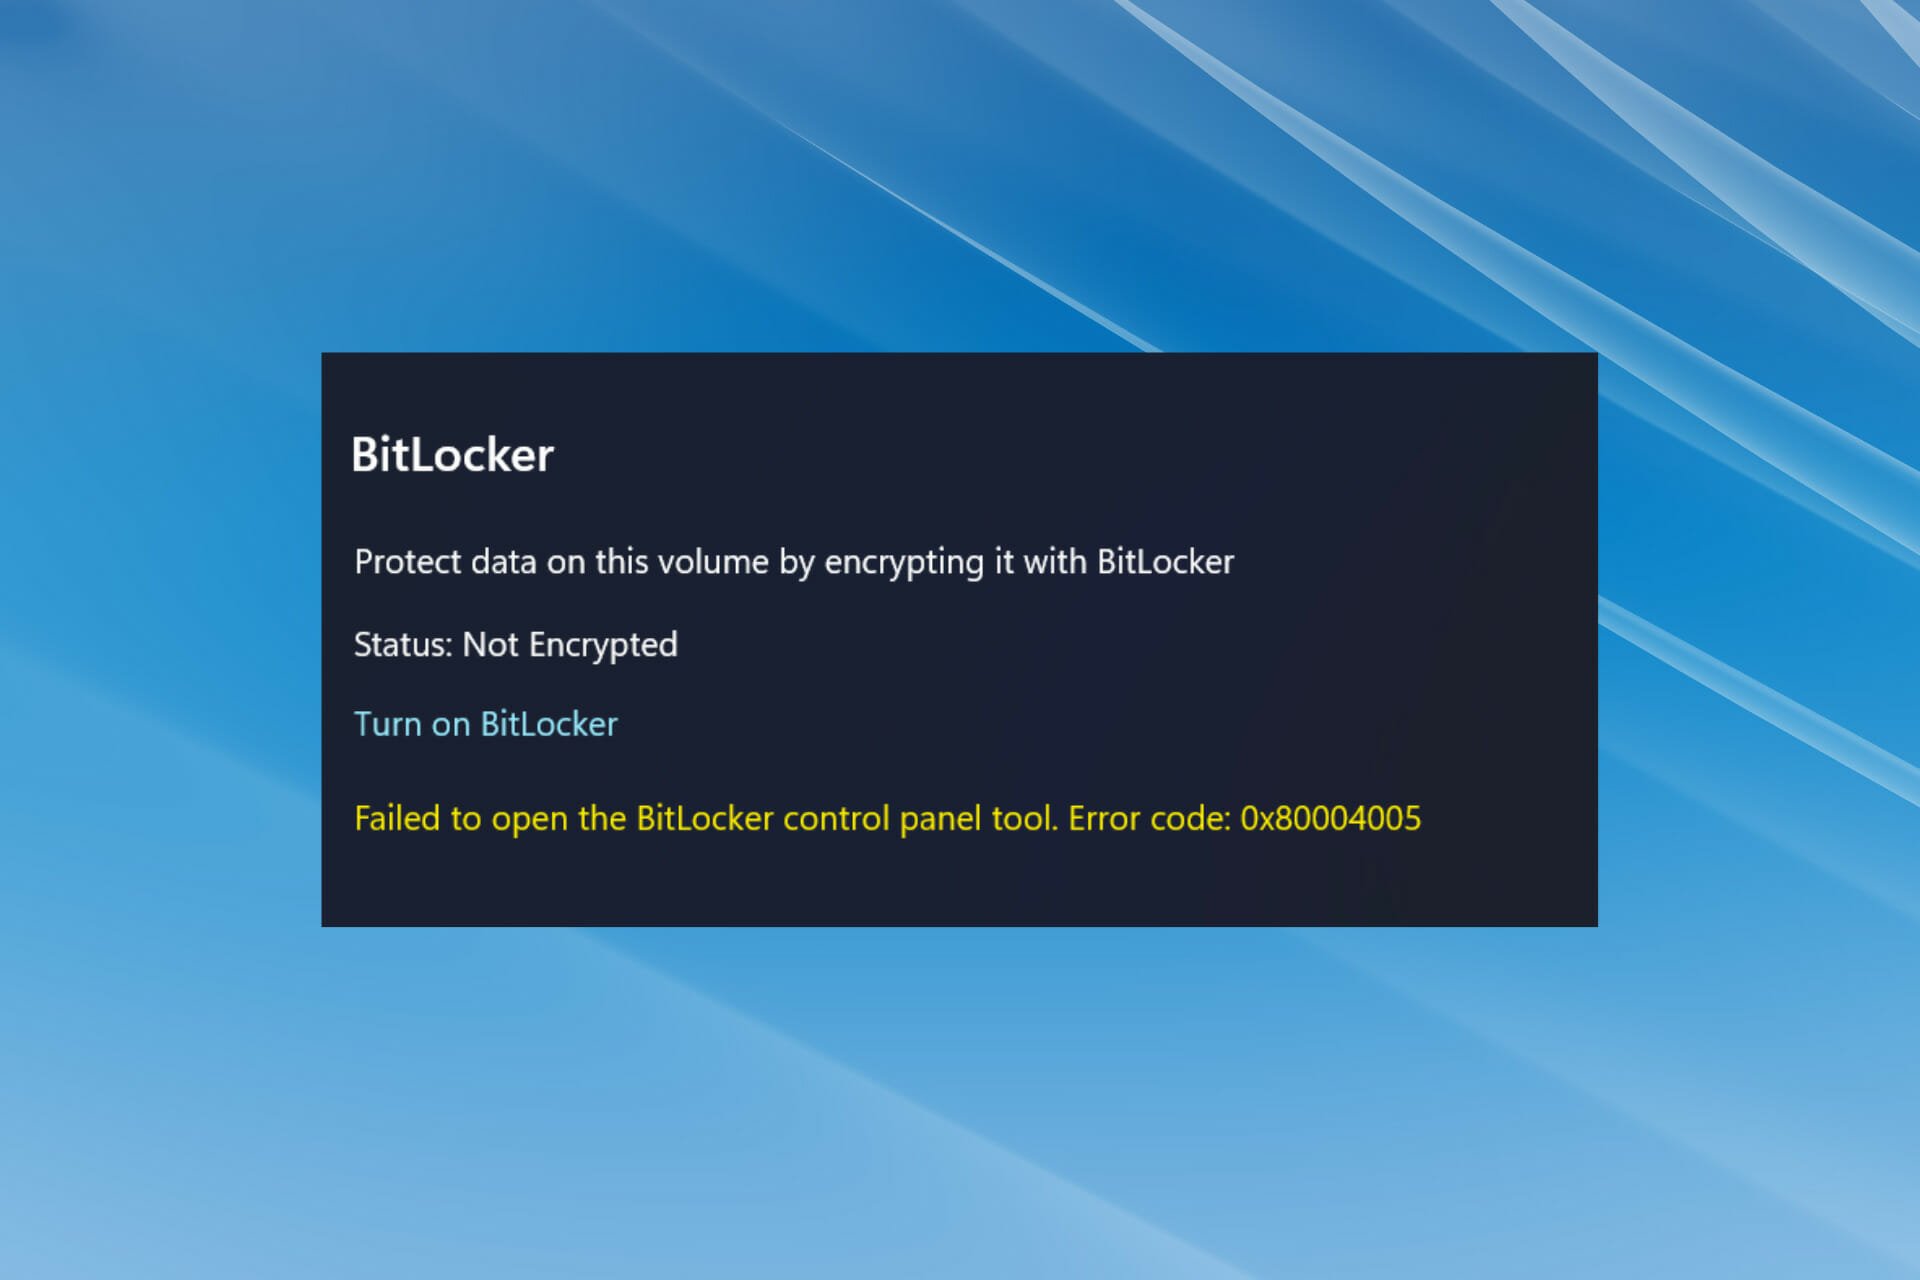 Fix Failed to open BitLocker control panel tool error in Windows 11